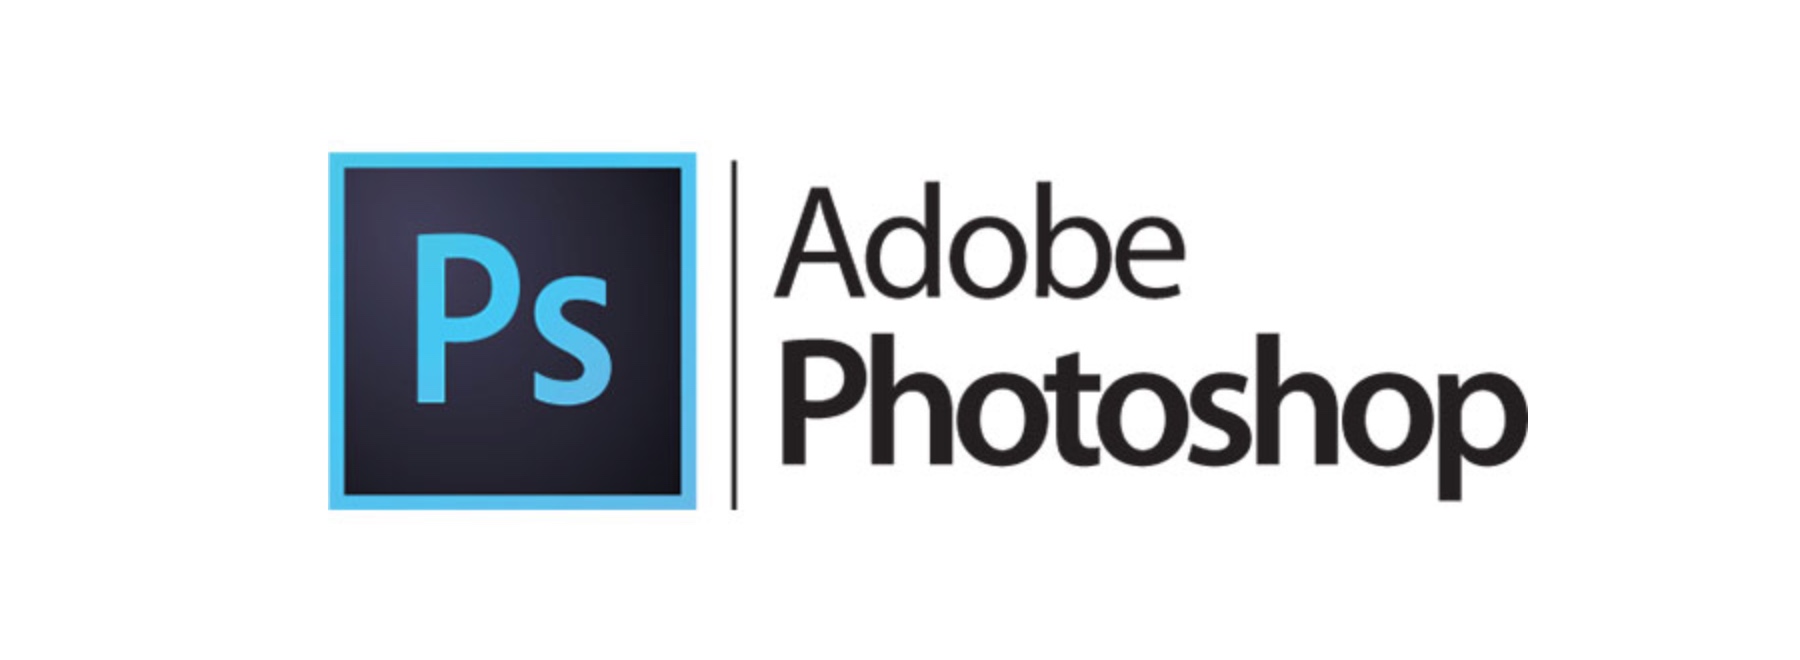 Design History of Adobe Photoshop